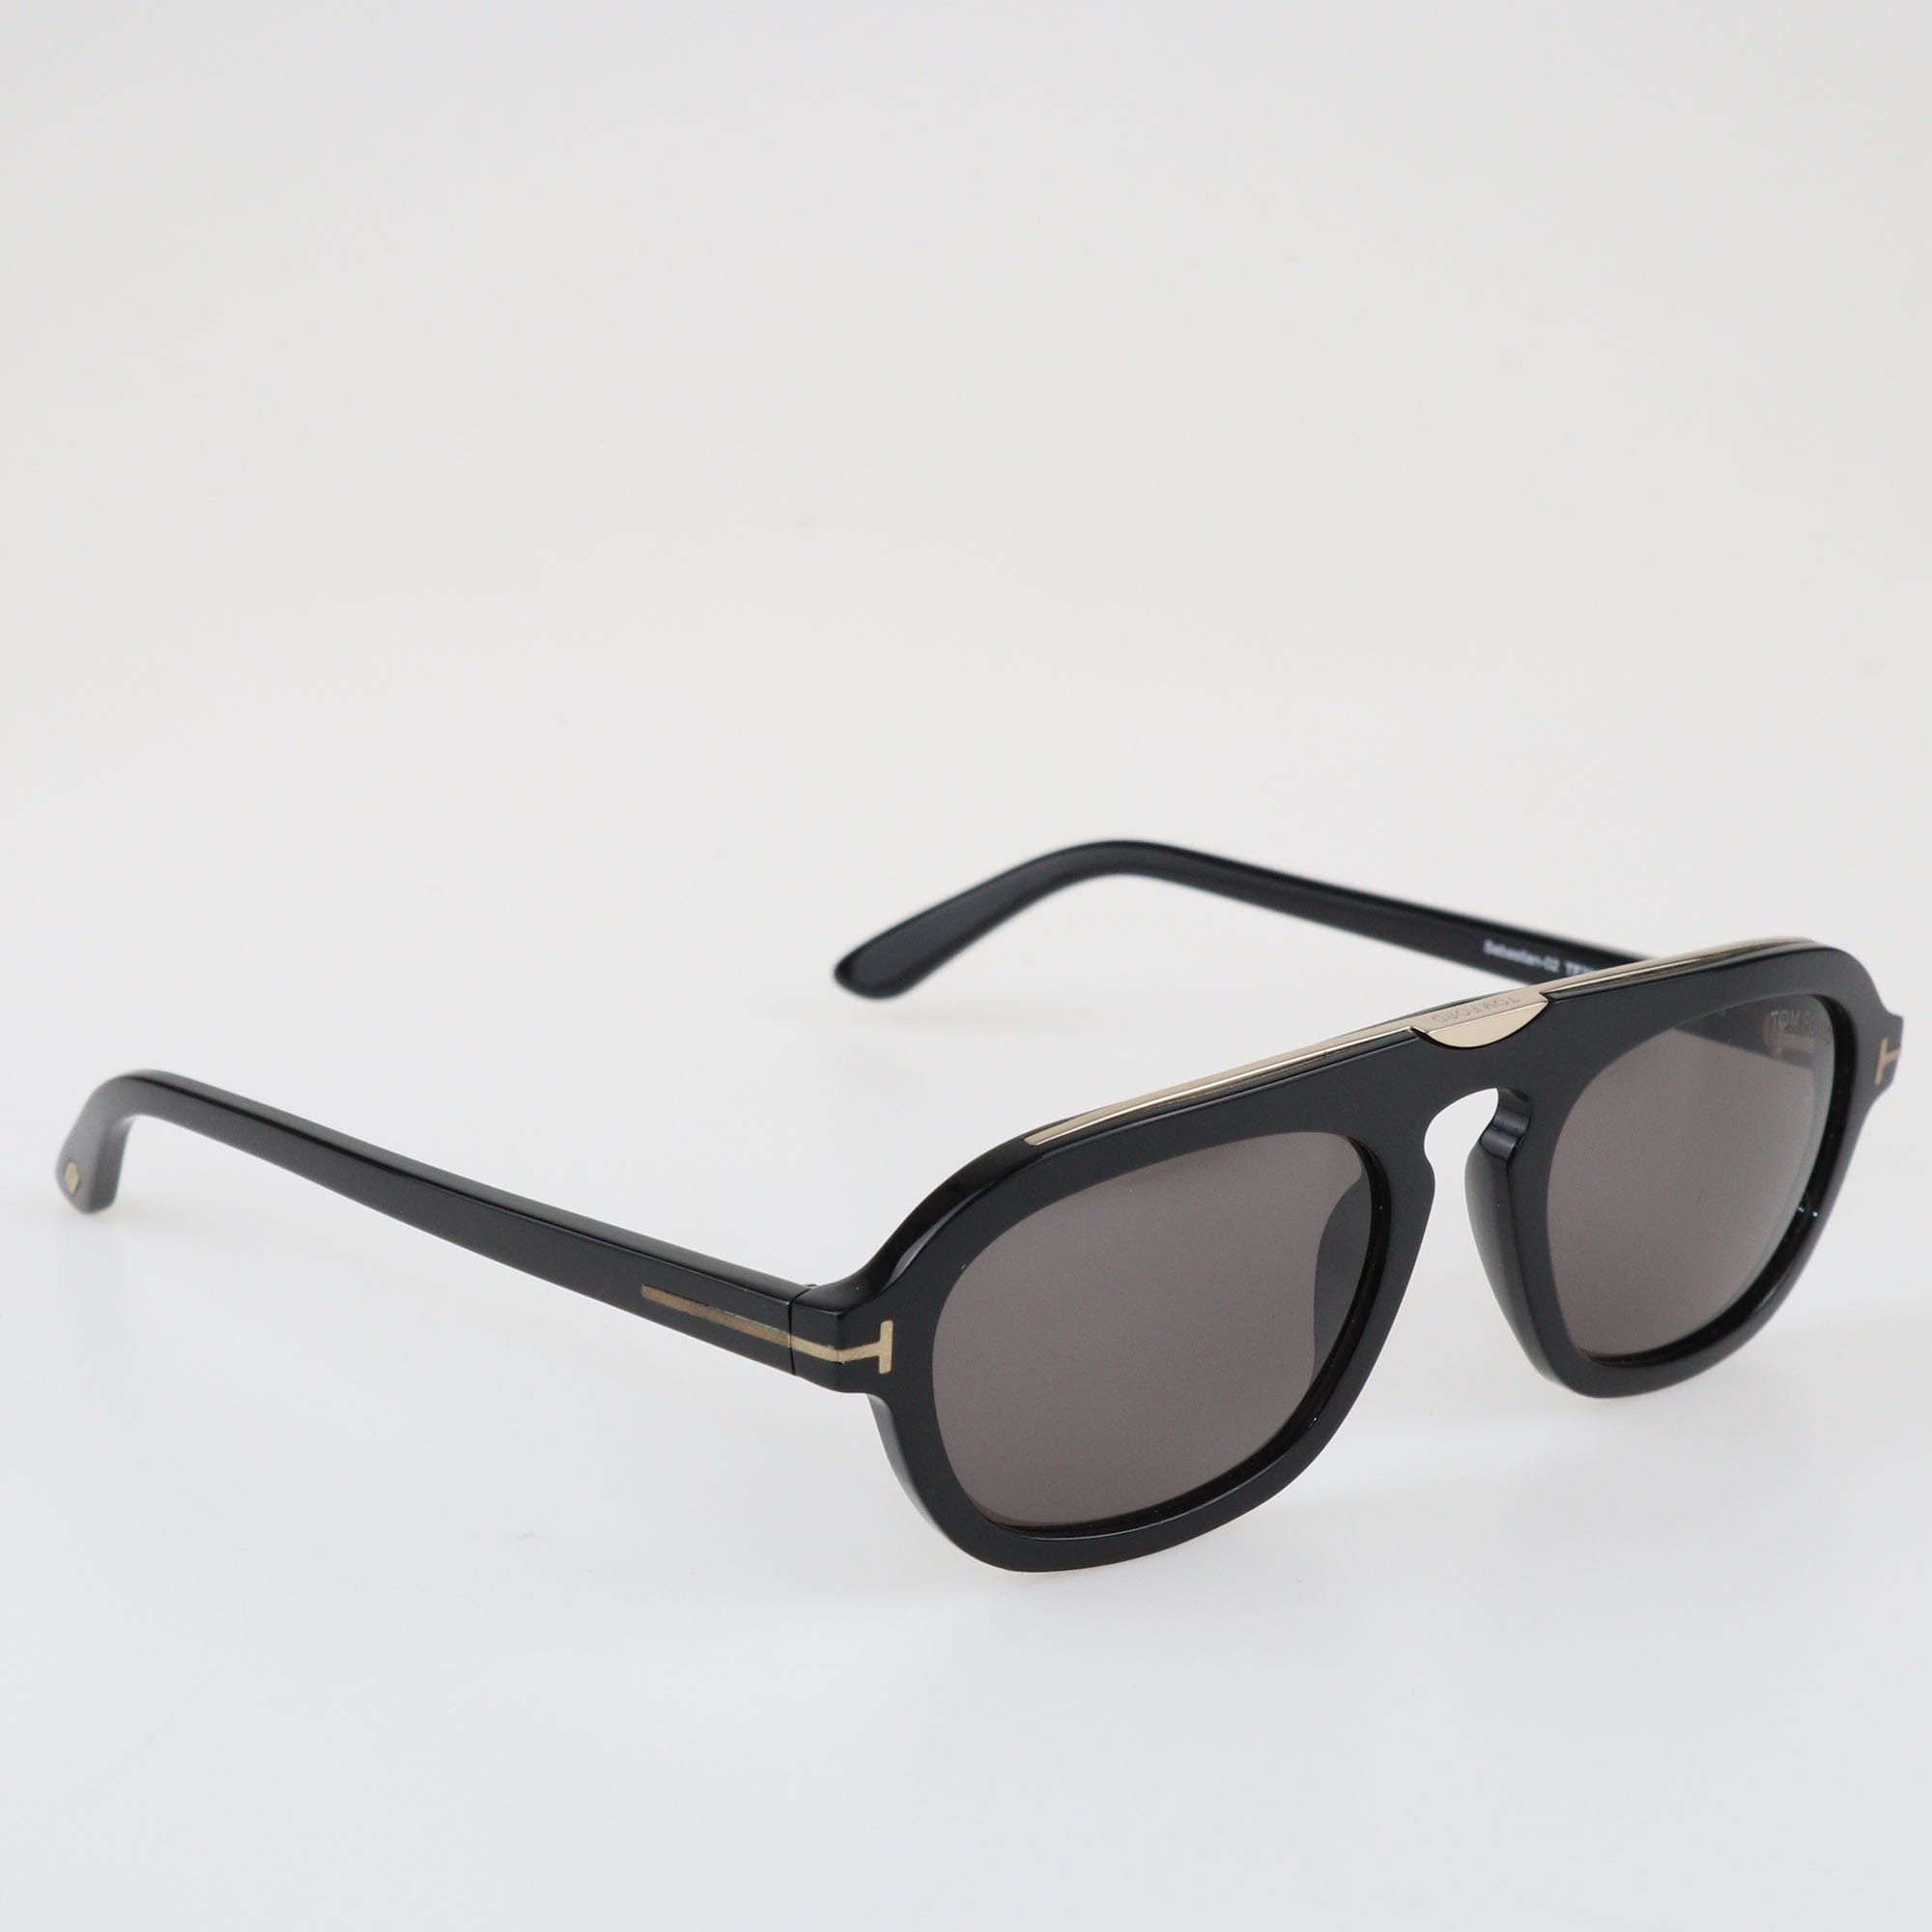 Tom Ford Black TF736 Sunglasses Accessories Tom Ford 